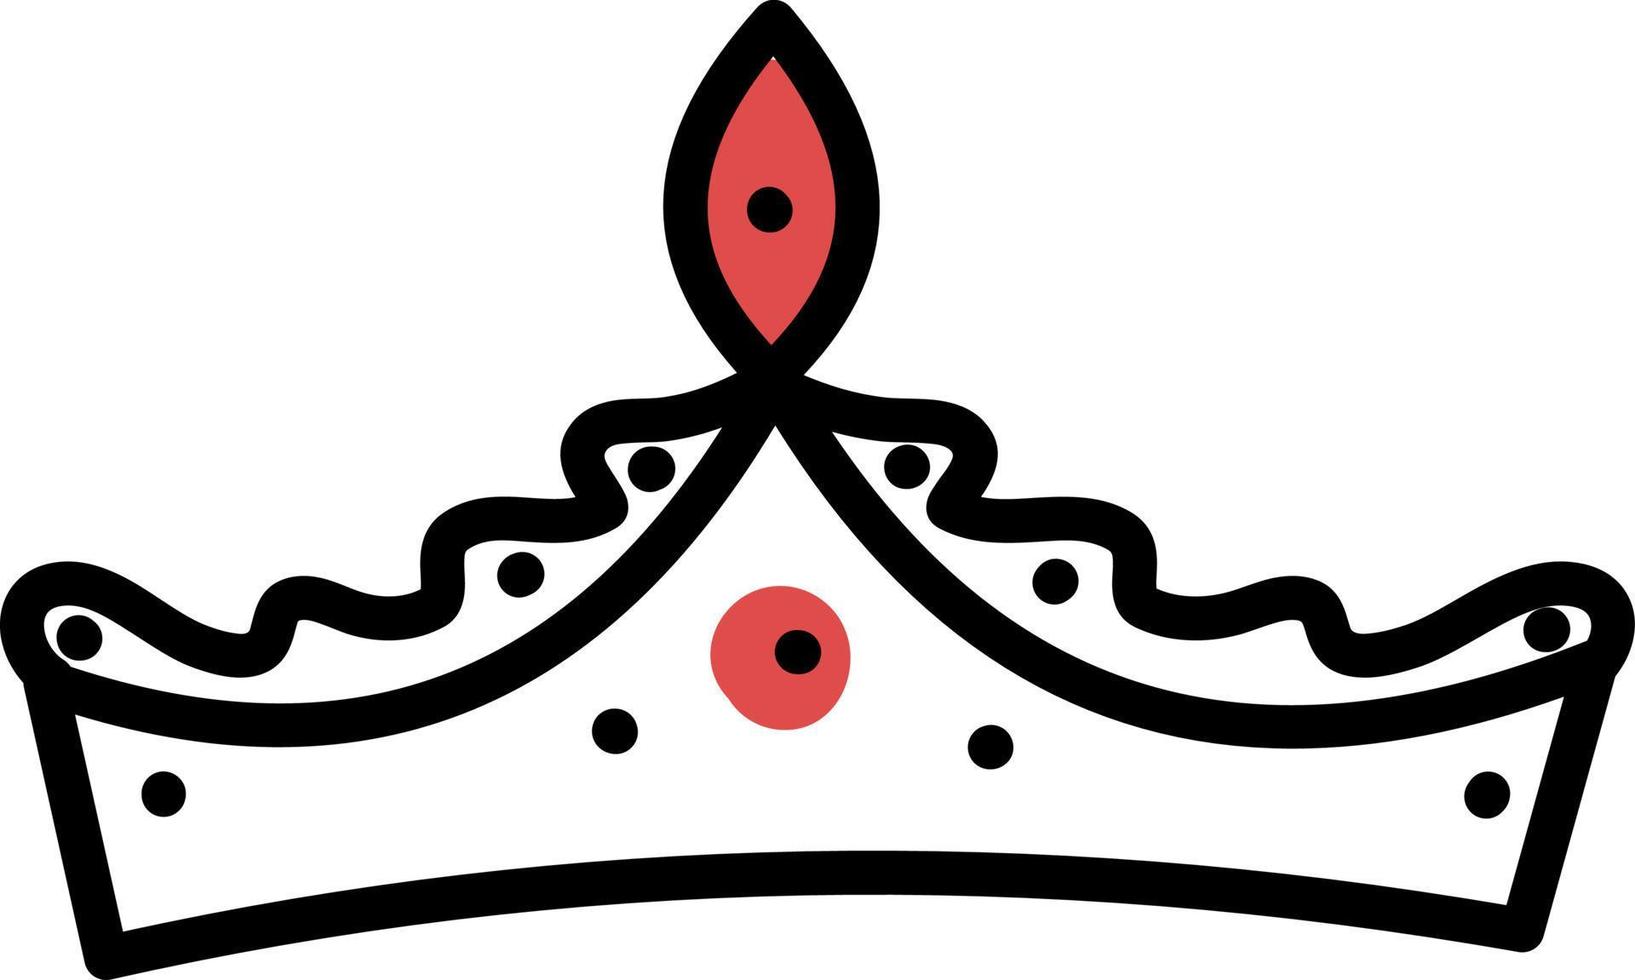 elegant tiara, illustration, vektor, på en vit bakgrund. vektor